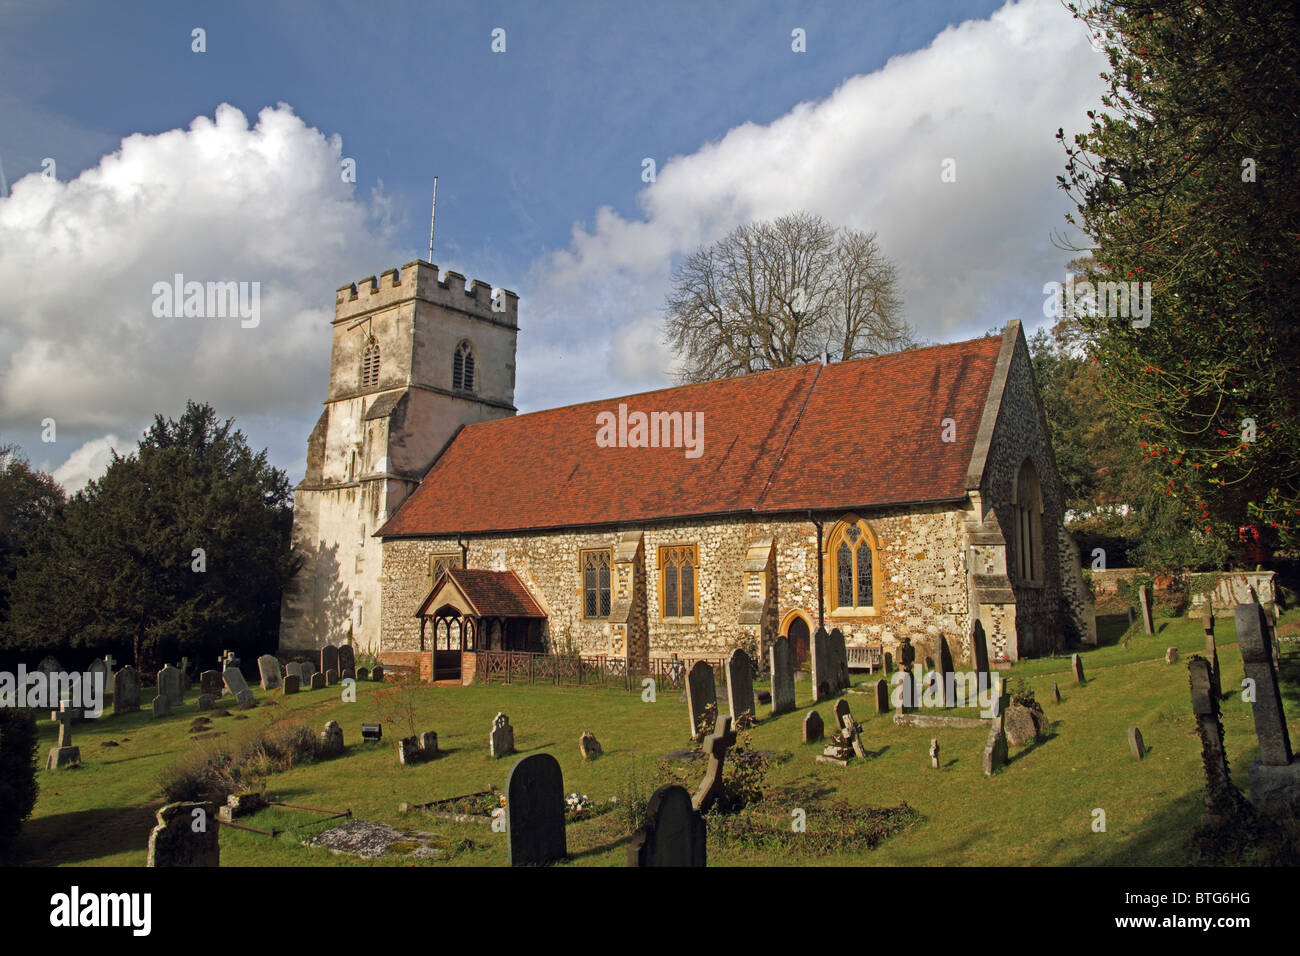 Medmenham, Buckinghamshire, England - St Peter's parish church dating from the 12th century Stock Photo